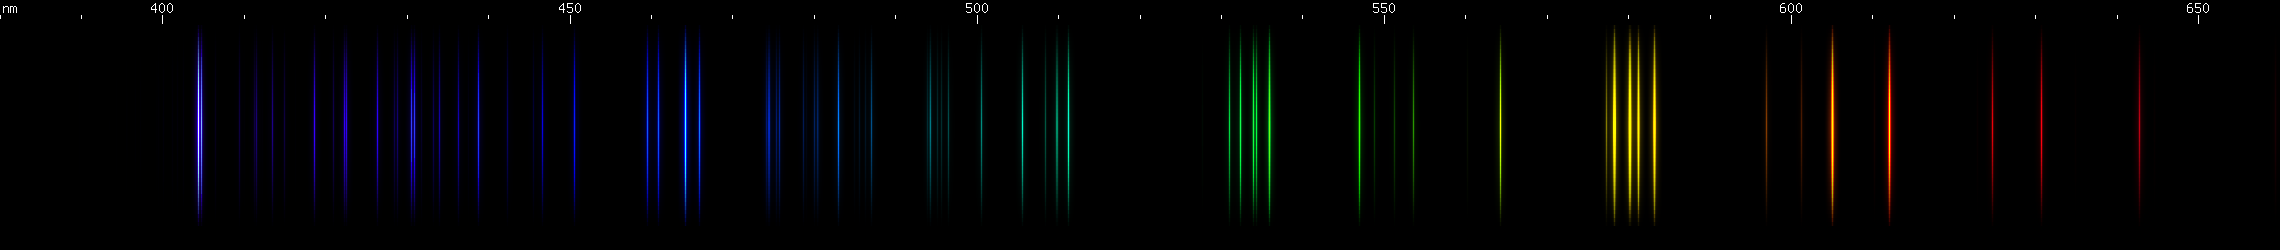 Spectral lines of Potassium.